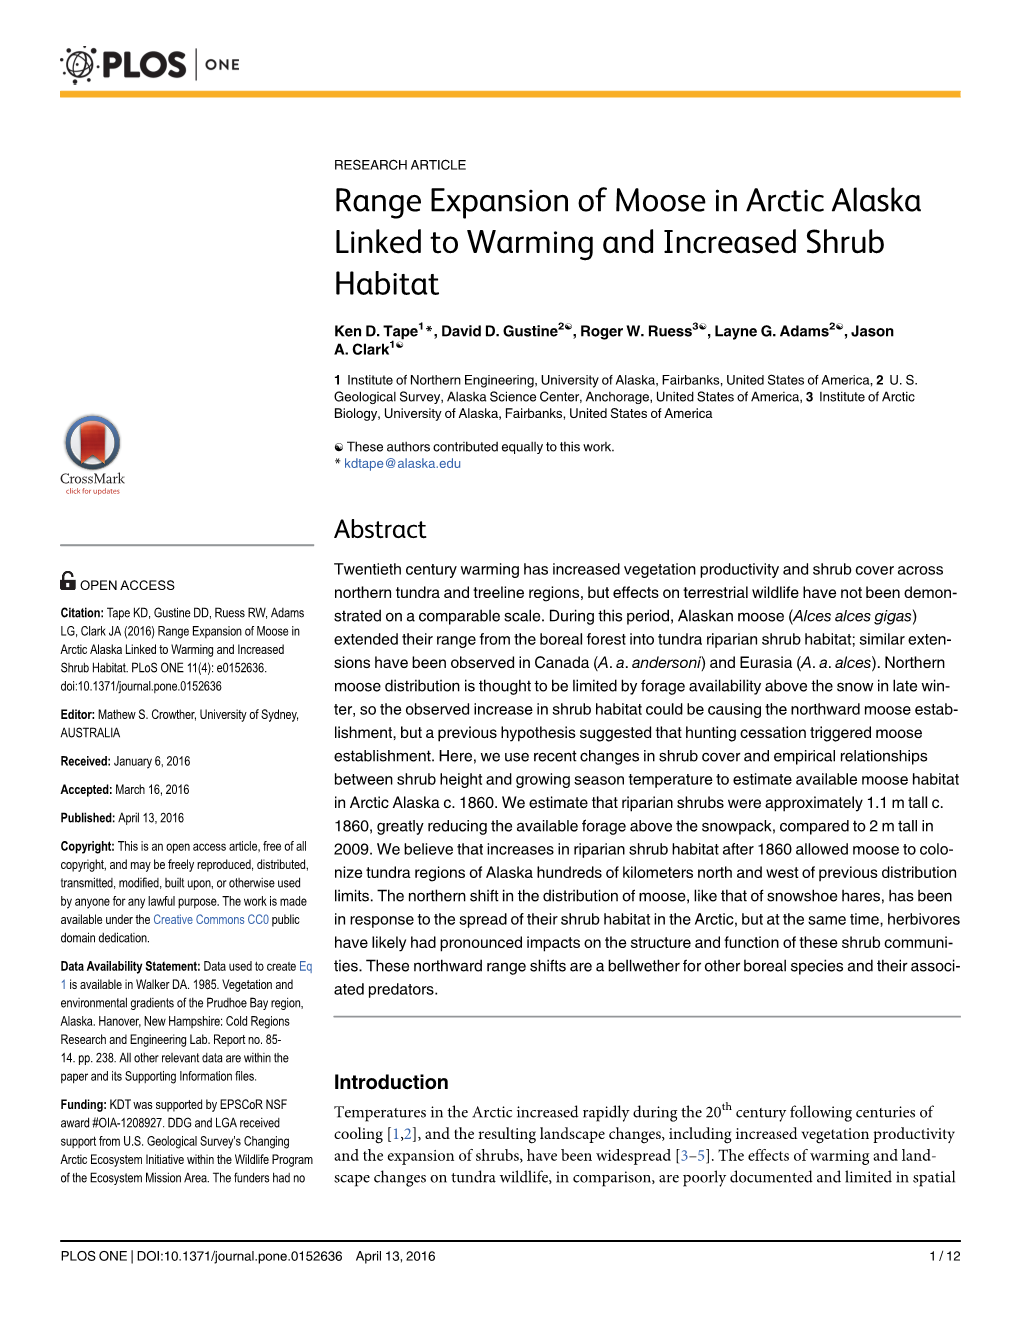 Range Expansion of Moose in Arctic Alaska Linked to Warming and Increased Shrub Habitat